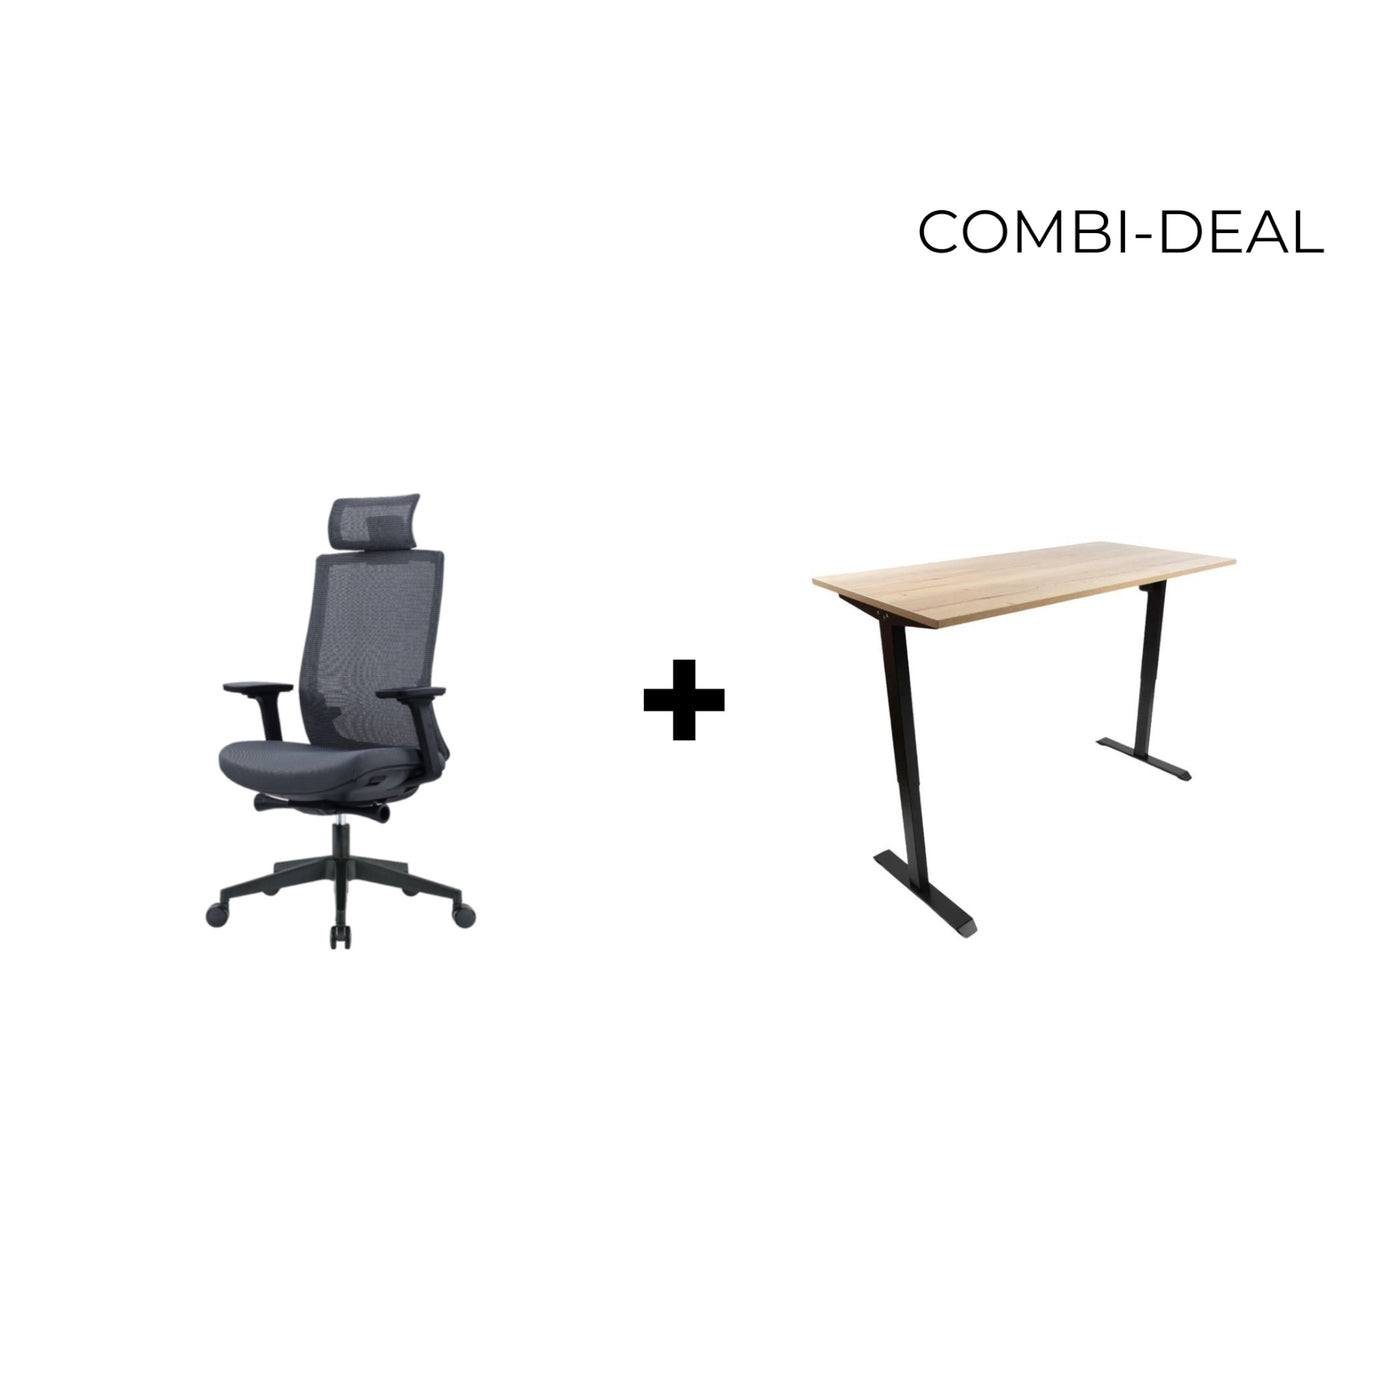 Home office - Comfort Deal